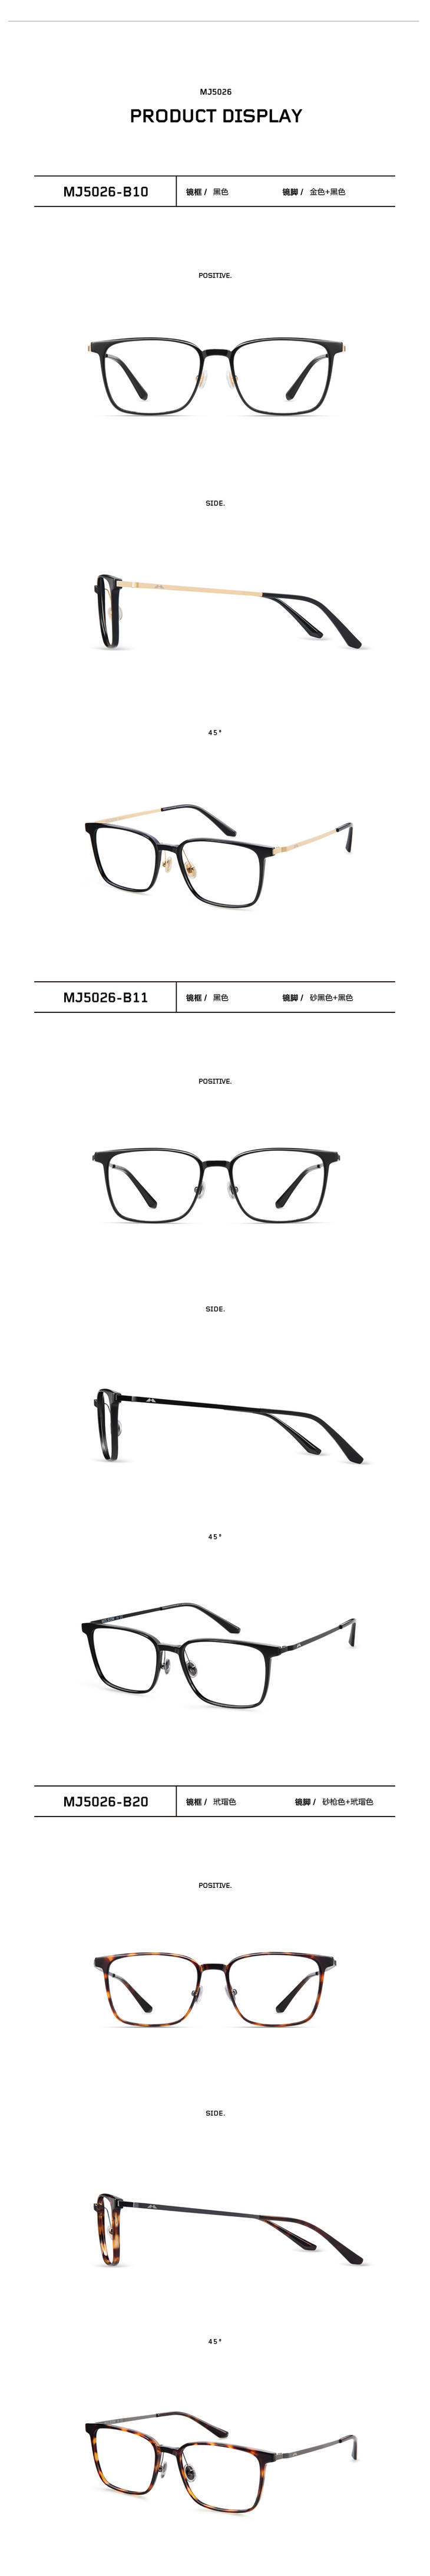 陌森molsion眼镜框经典商务眼镜mj5026